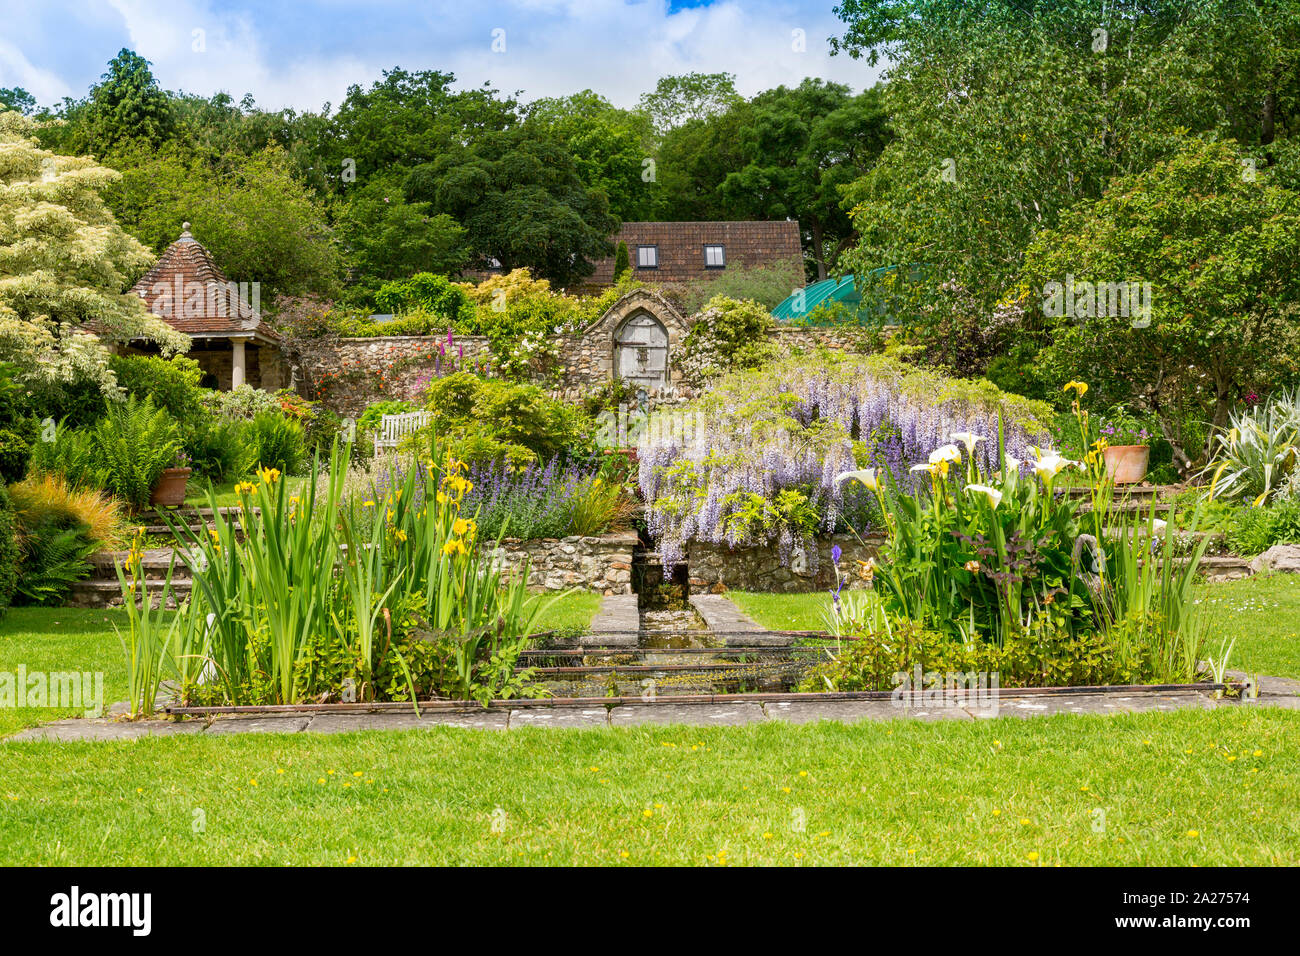 The attractive and colourful Millennium Garden at Burrow Farm Gardens, near Axminster, Devon, England, UK Stock Photo